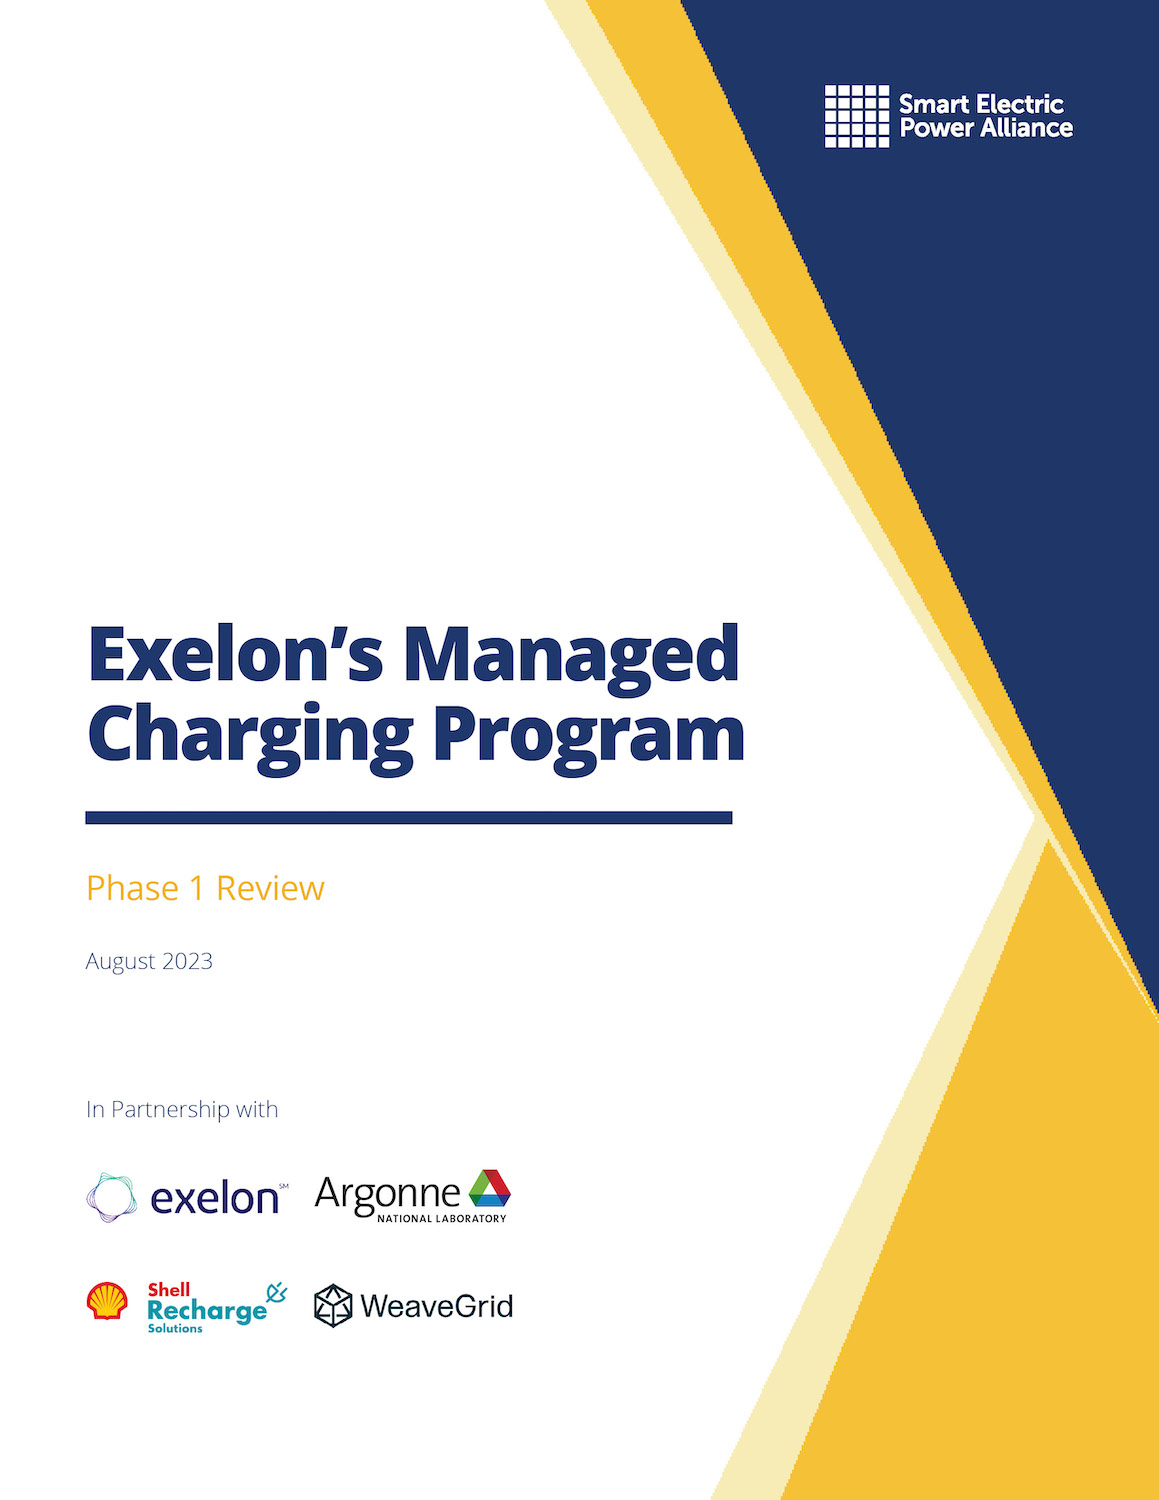 Exelon’s Managed Charging Program